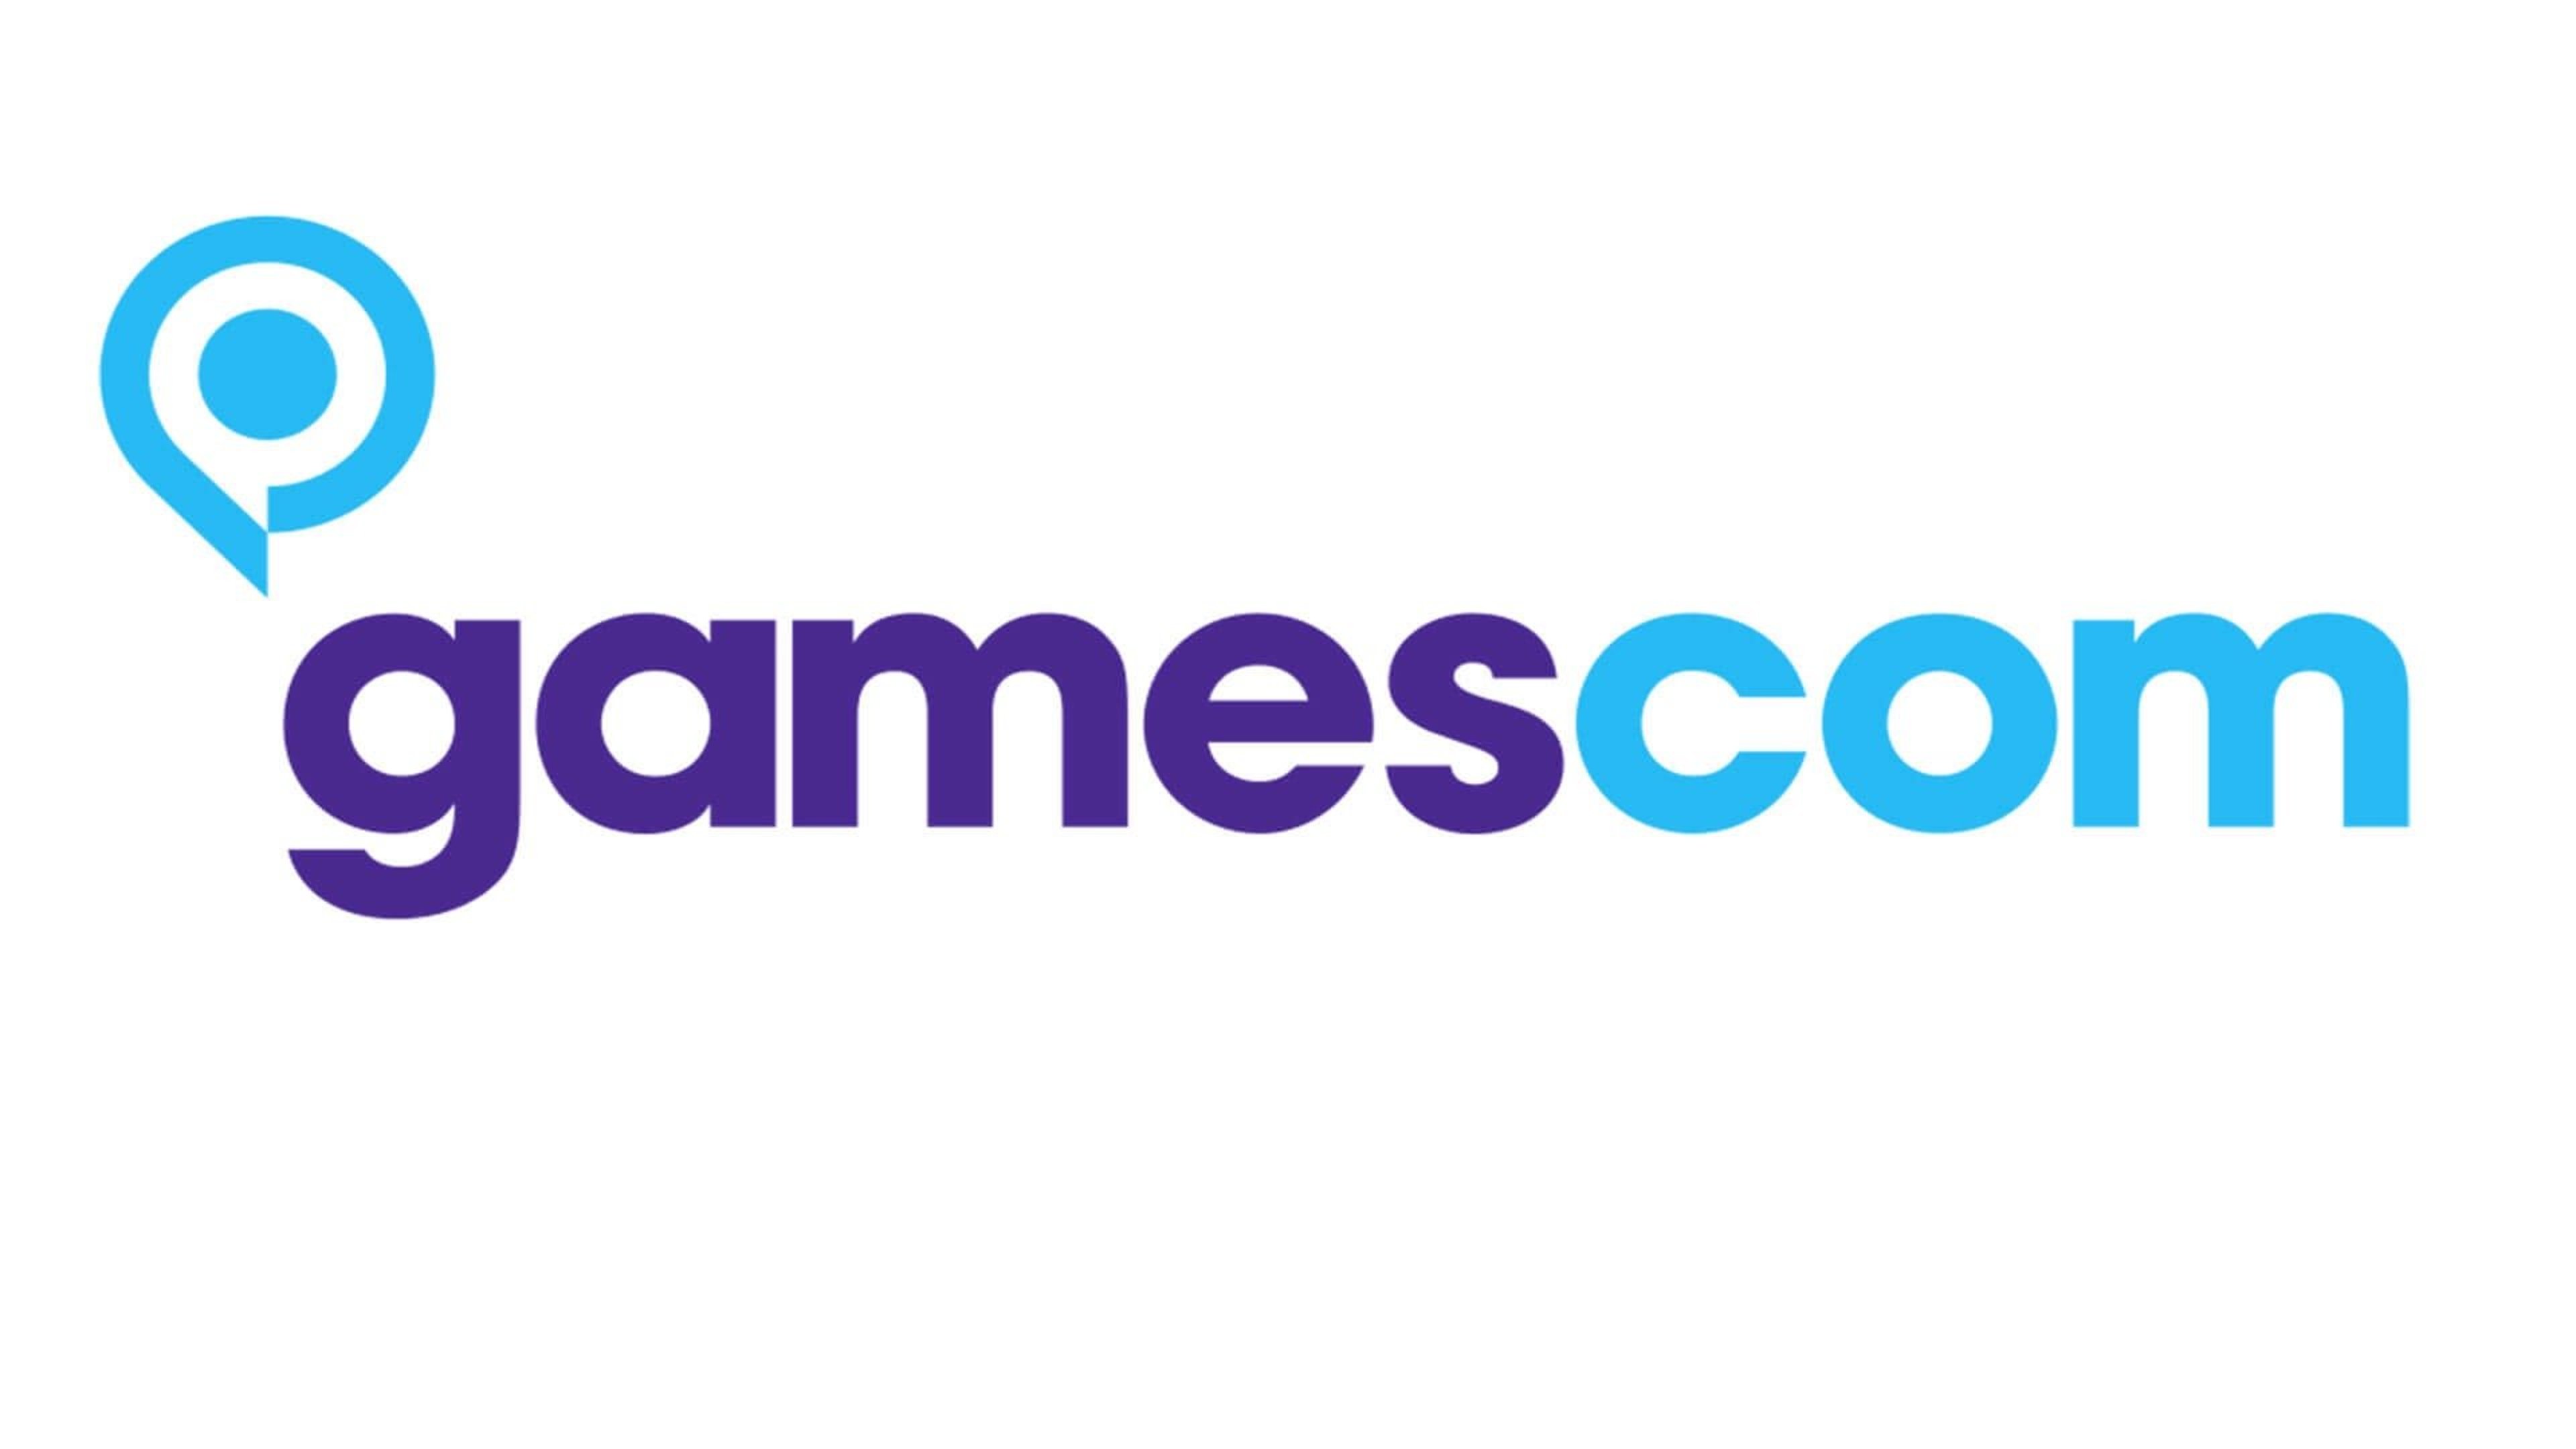 L’Olanda è stata scelta come paese partner di gamescom 2019